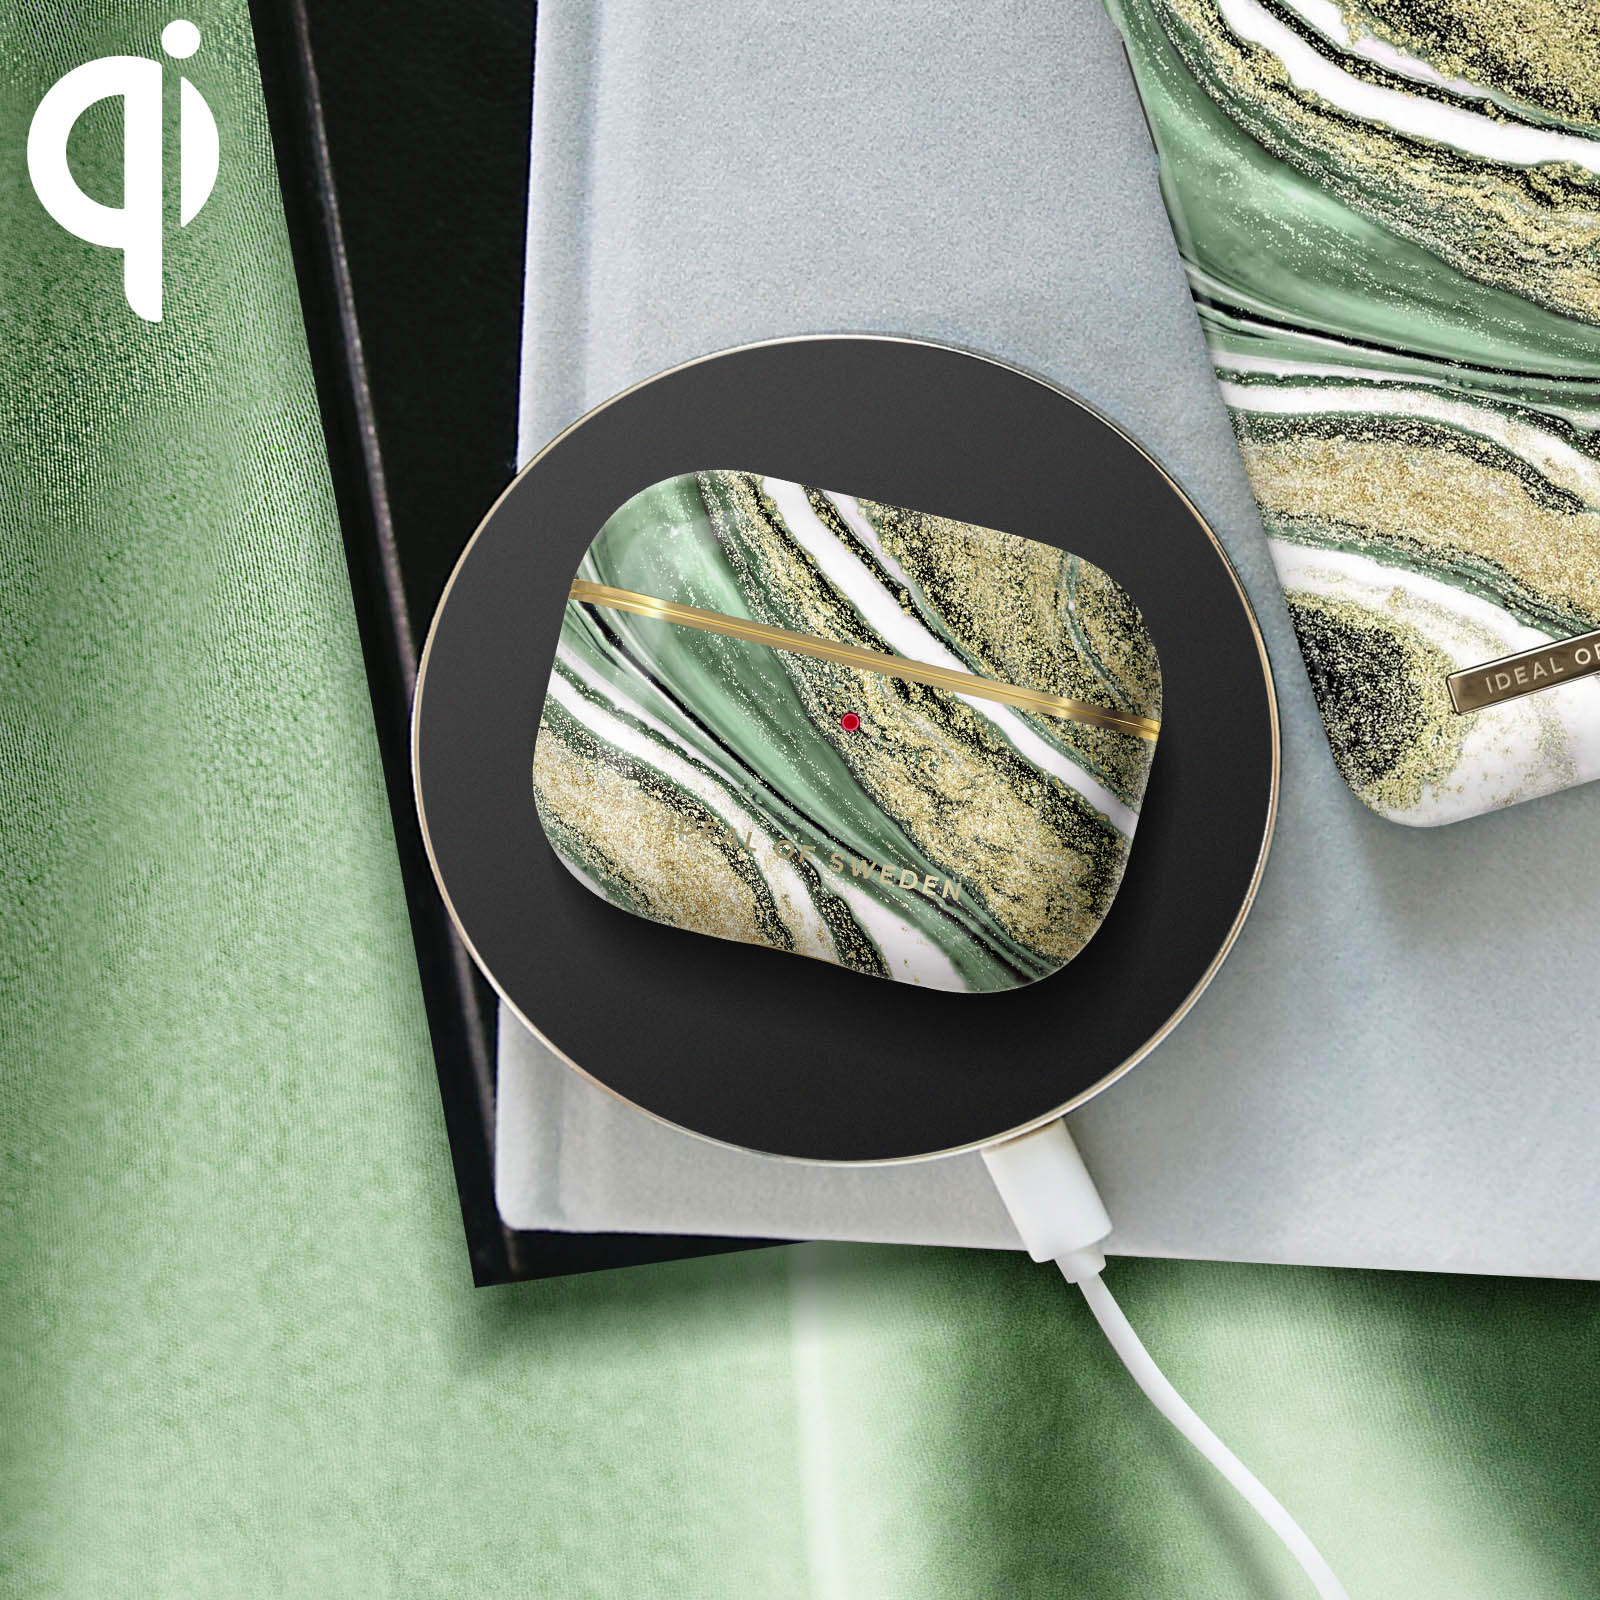 IDEAL OF SWEDEN Case für: IDFAPC-PRO-192 passend Apple Green Cosmic Swirl Full Cover AirPod